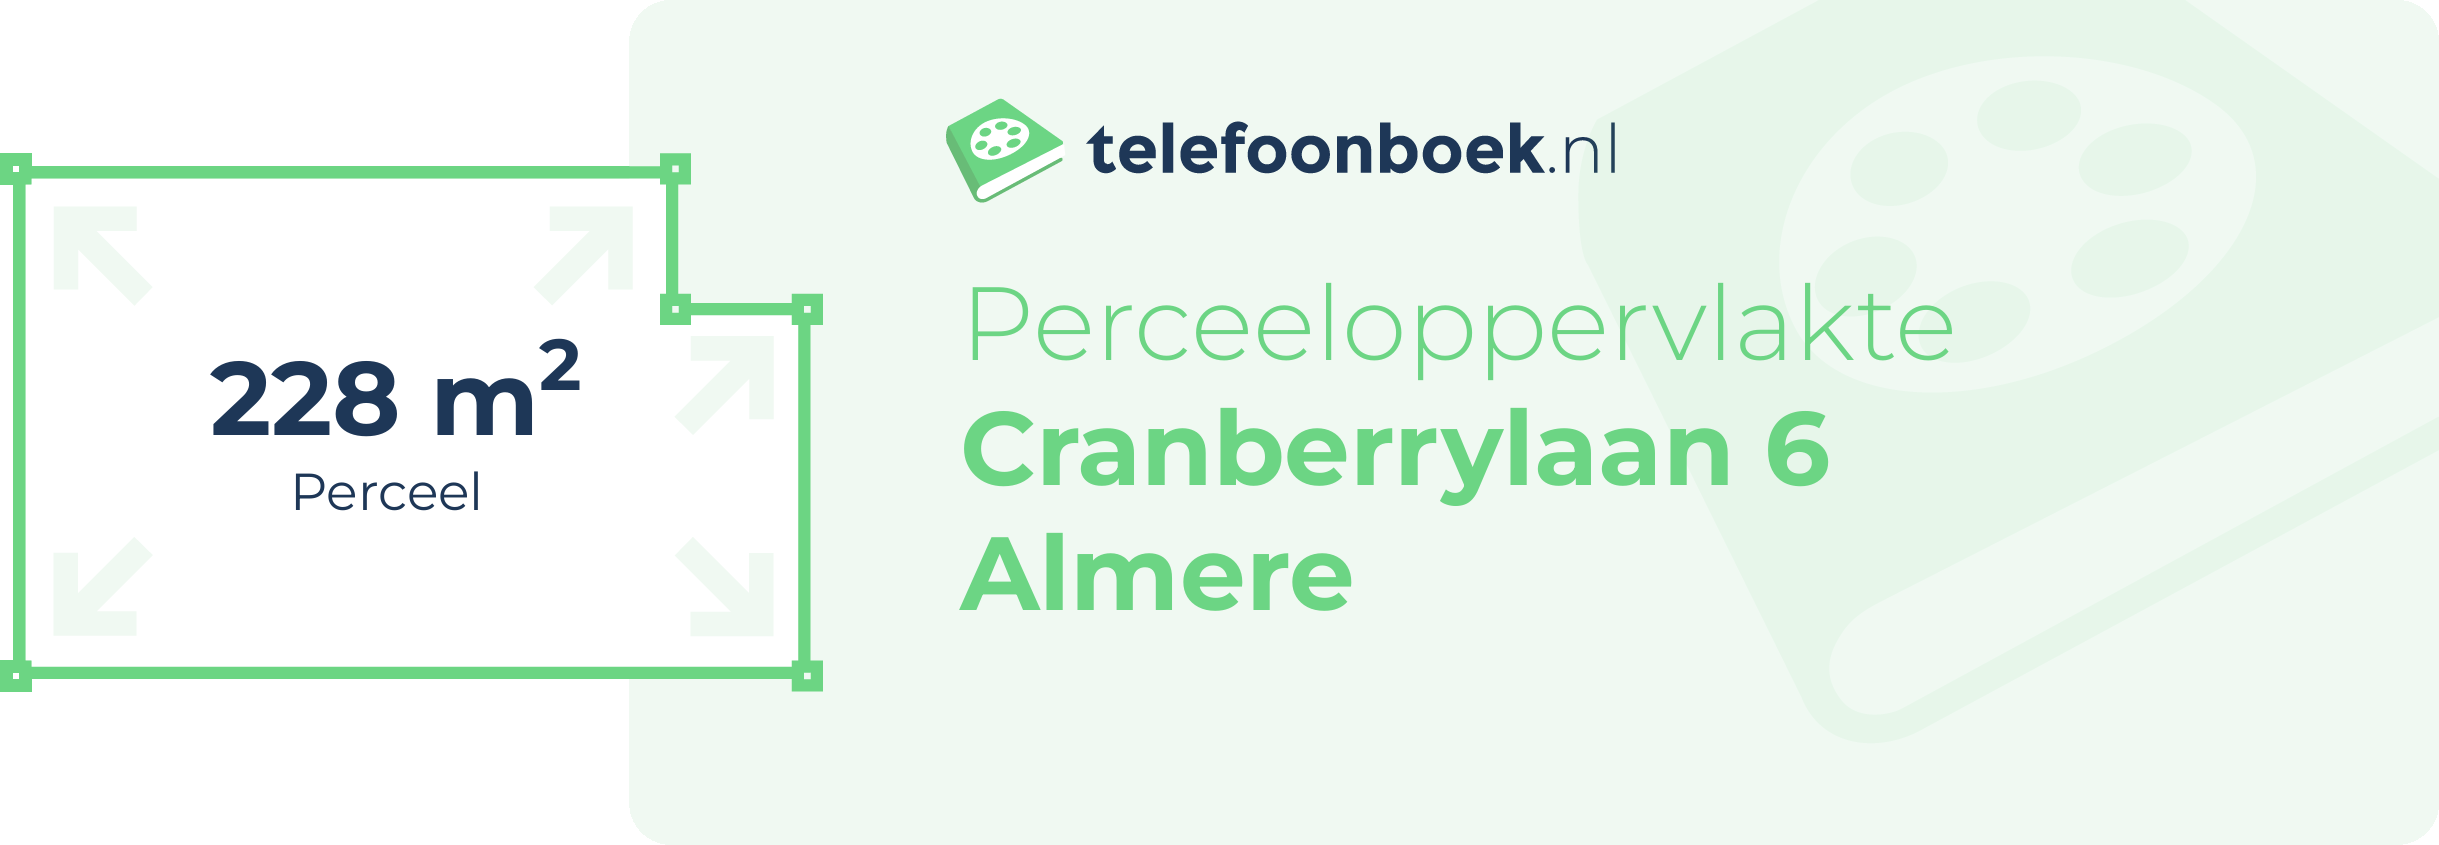 Perceeloppervlakte Cranberrylaan 6 Almere